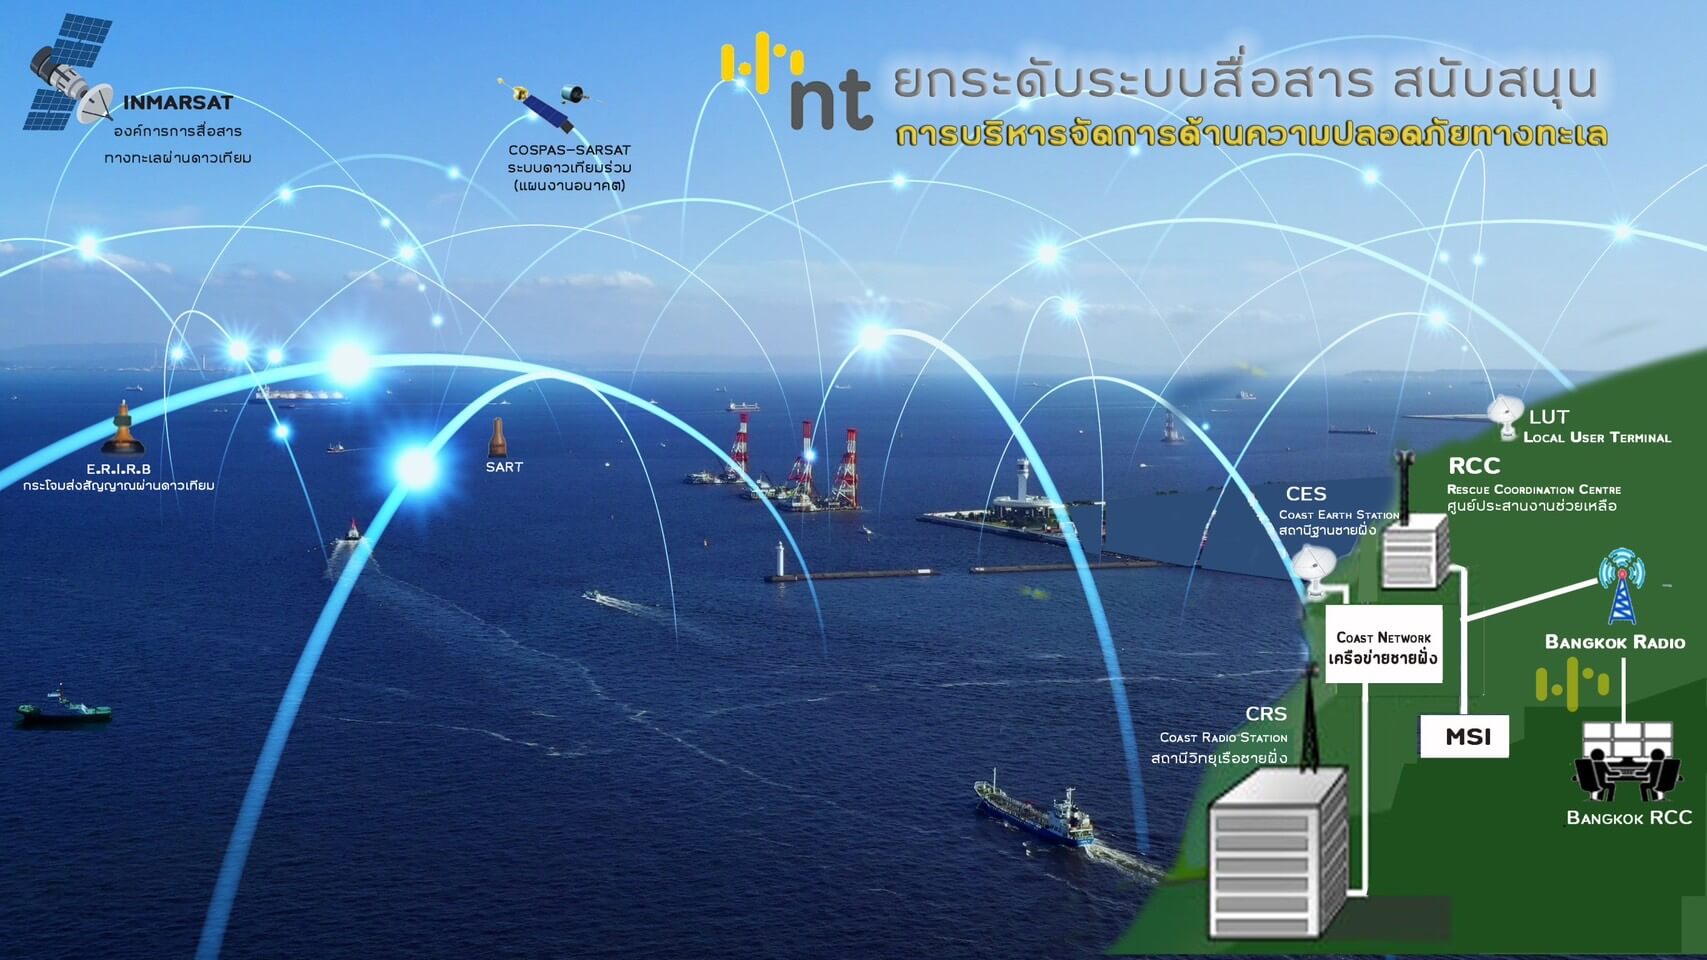 NT เตรียมพร้อมปฏิบัติการดูแลความปลอดภัยทางทะเลด้วยมาตรฐานสากลพัฒนาระบบสื่อสารวิทยุเรือสู่ระบบ GMDSS